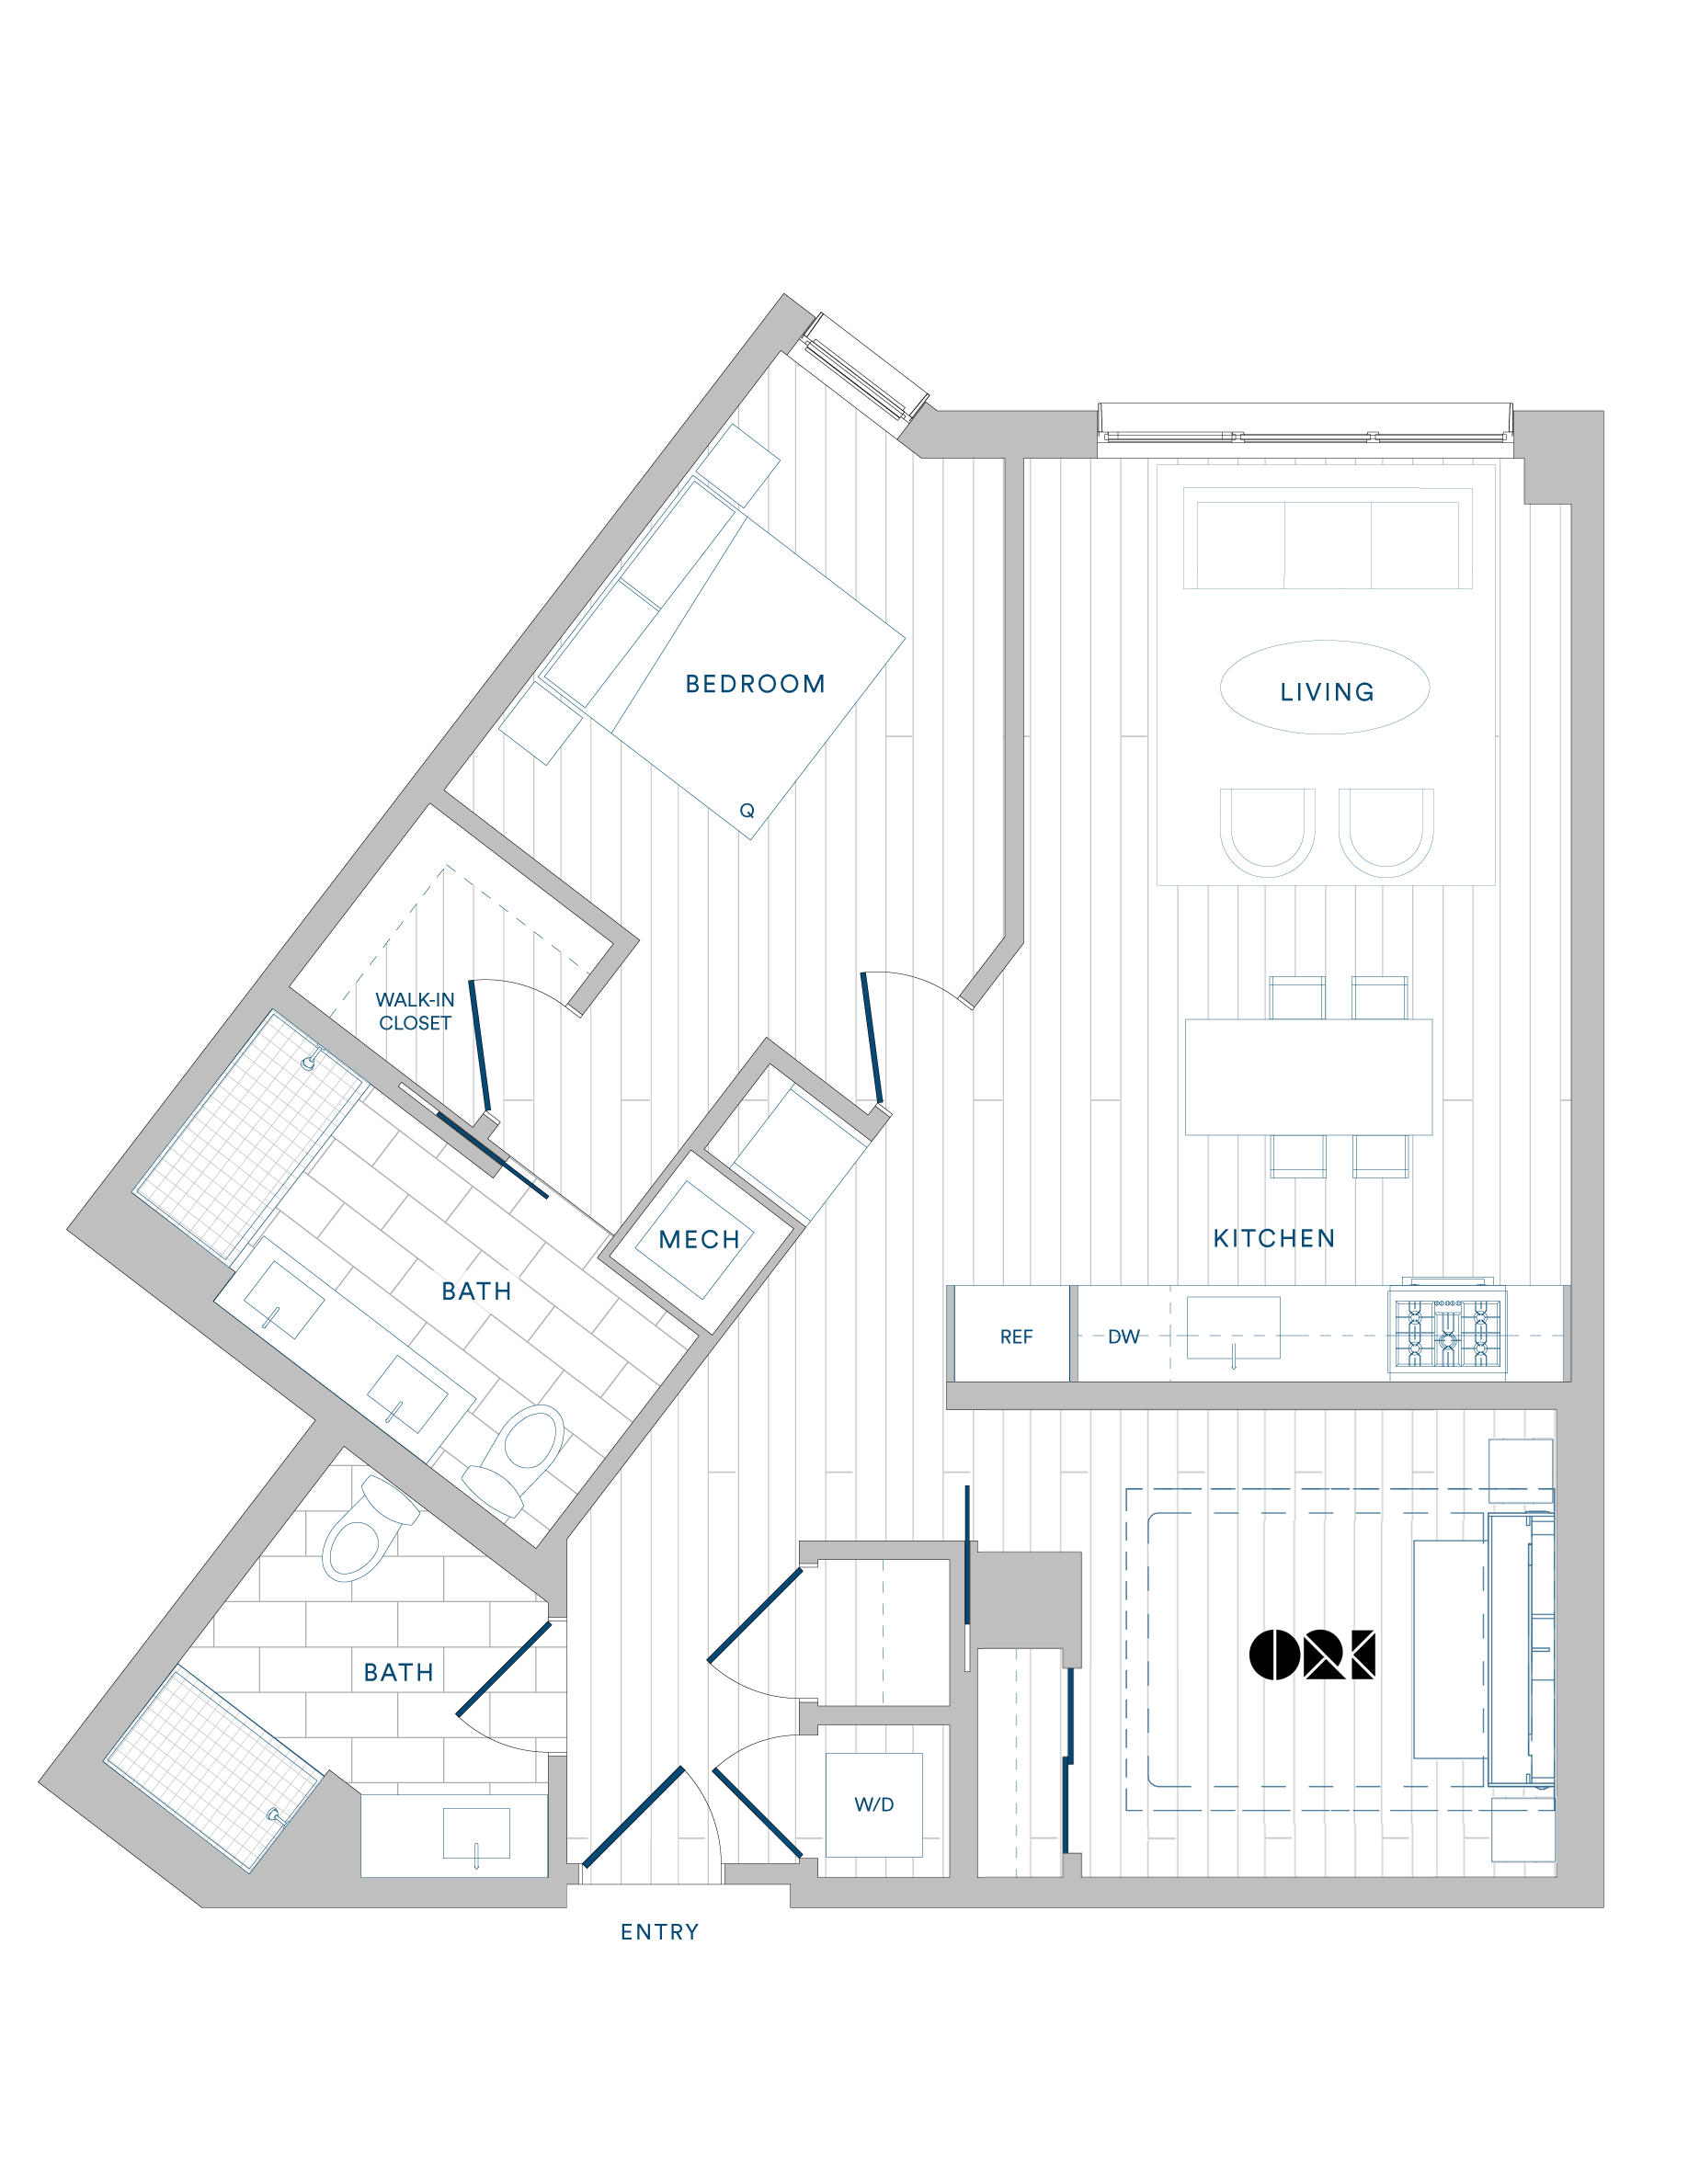 Floorplan for Apartment #902, 2 bedroom unit at Margarite